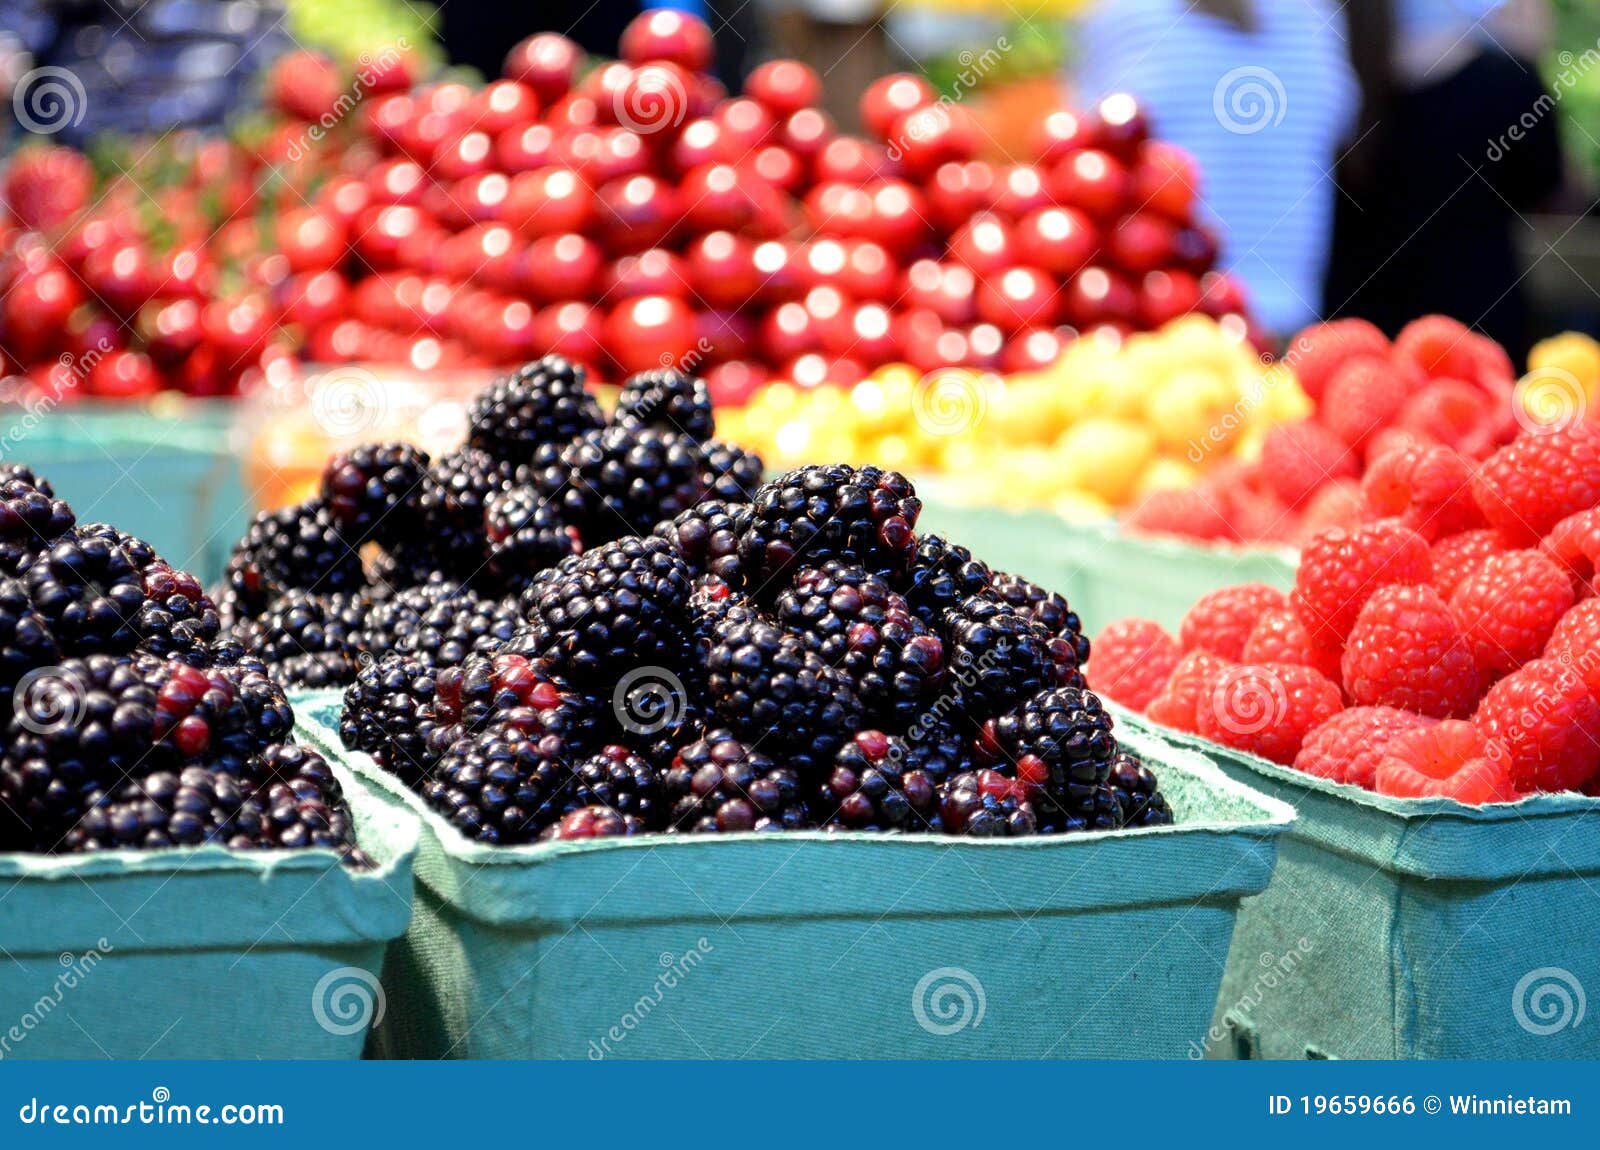 fresh berries at farmers market